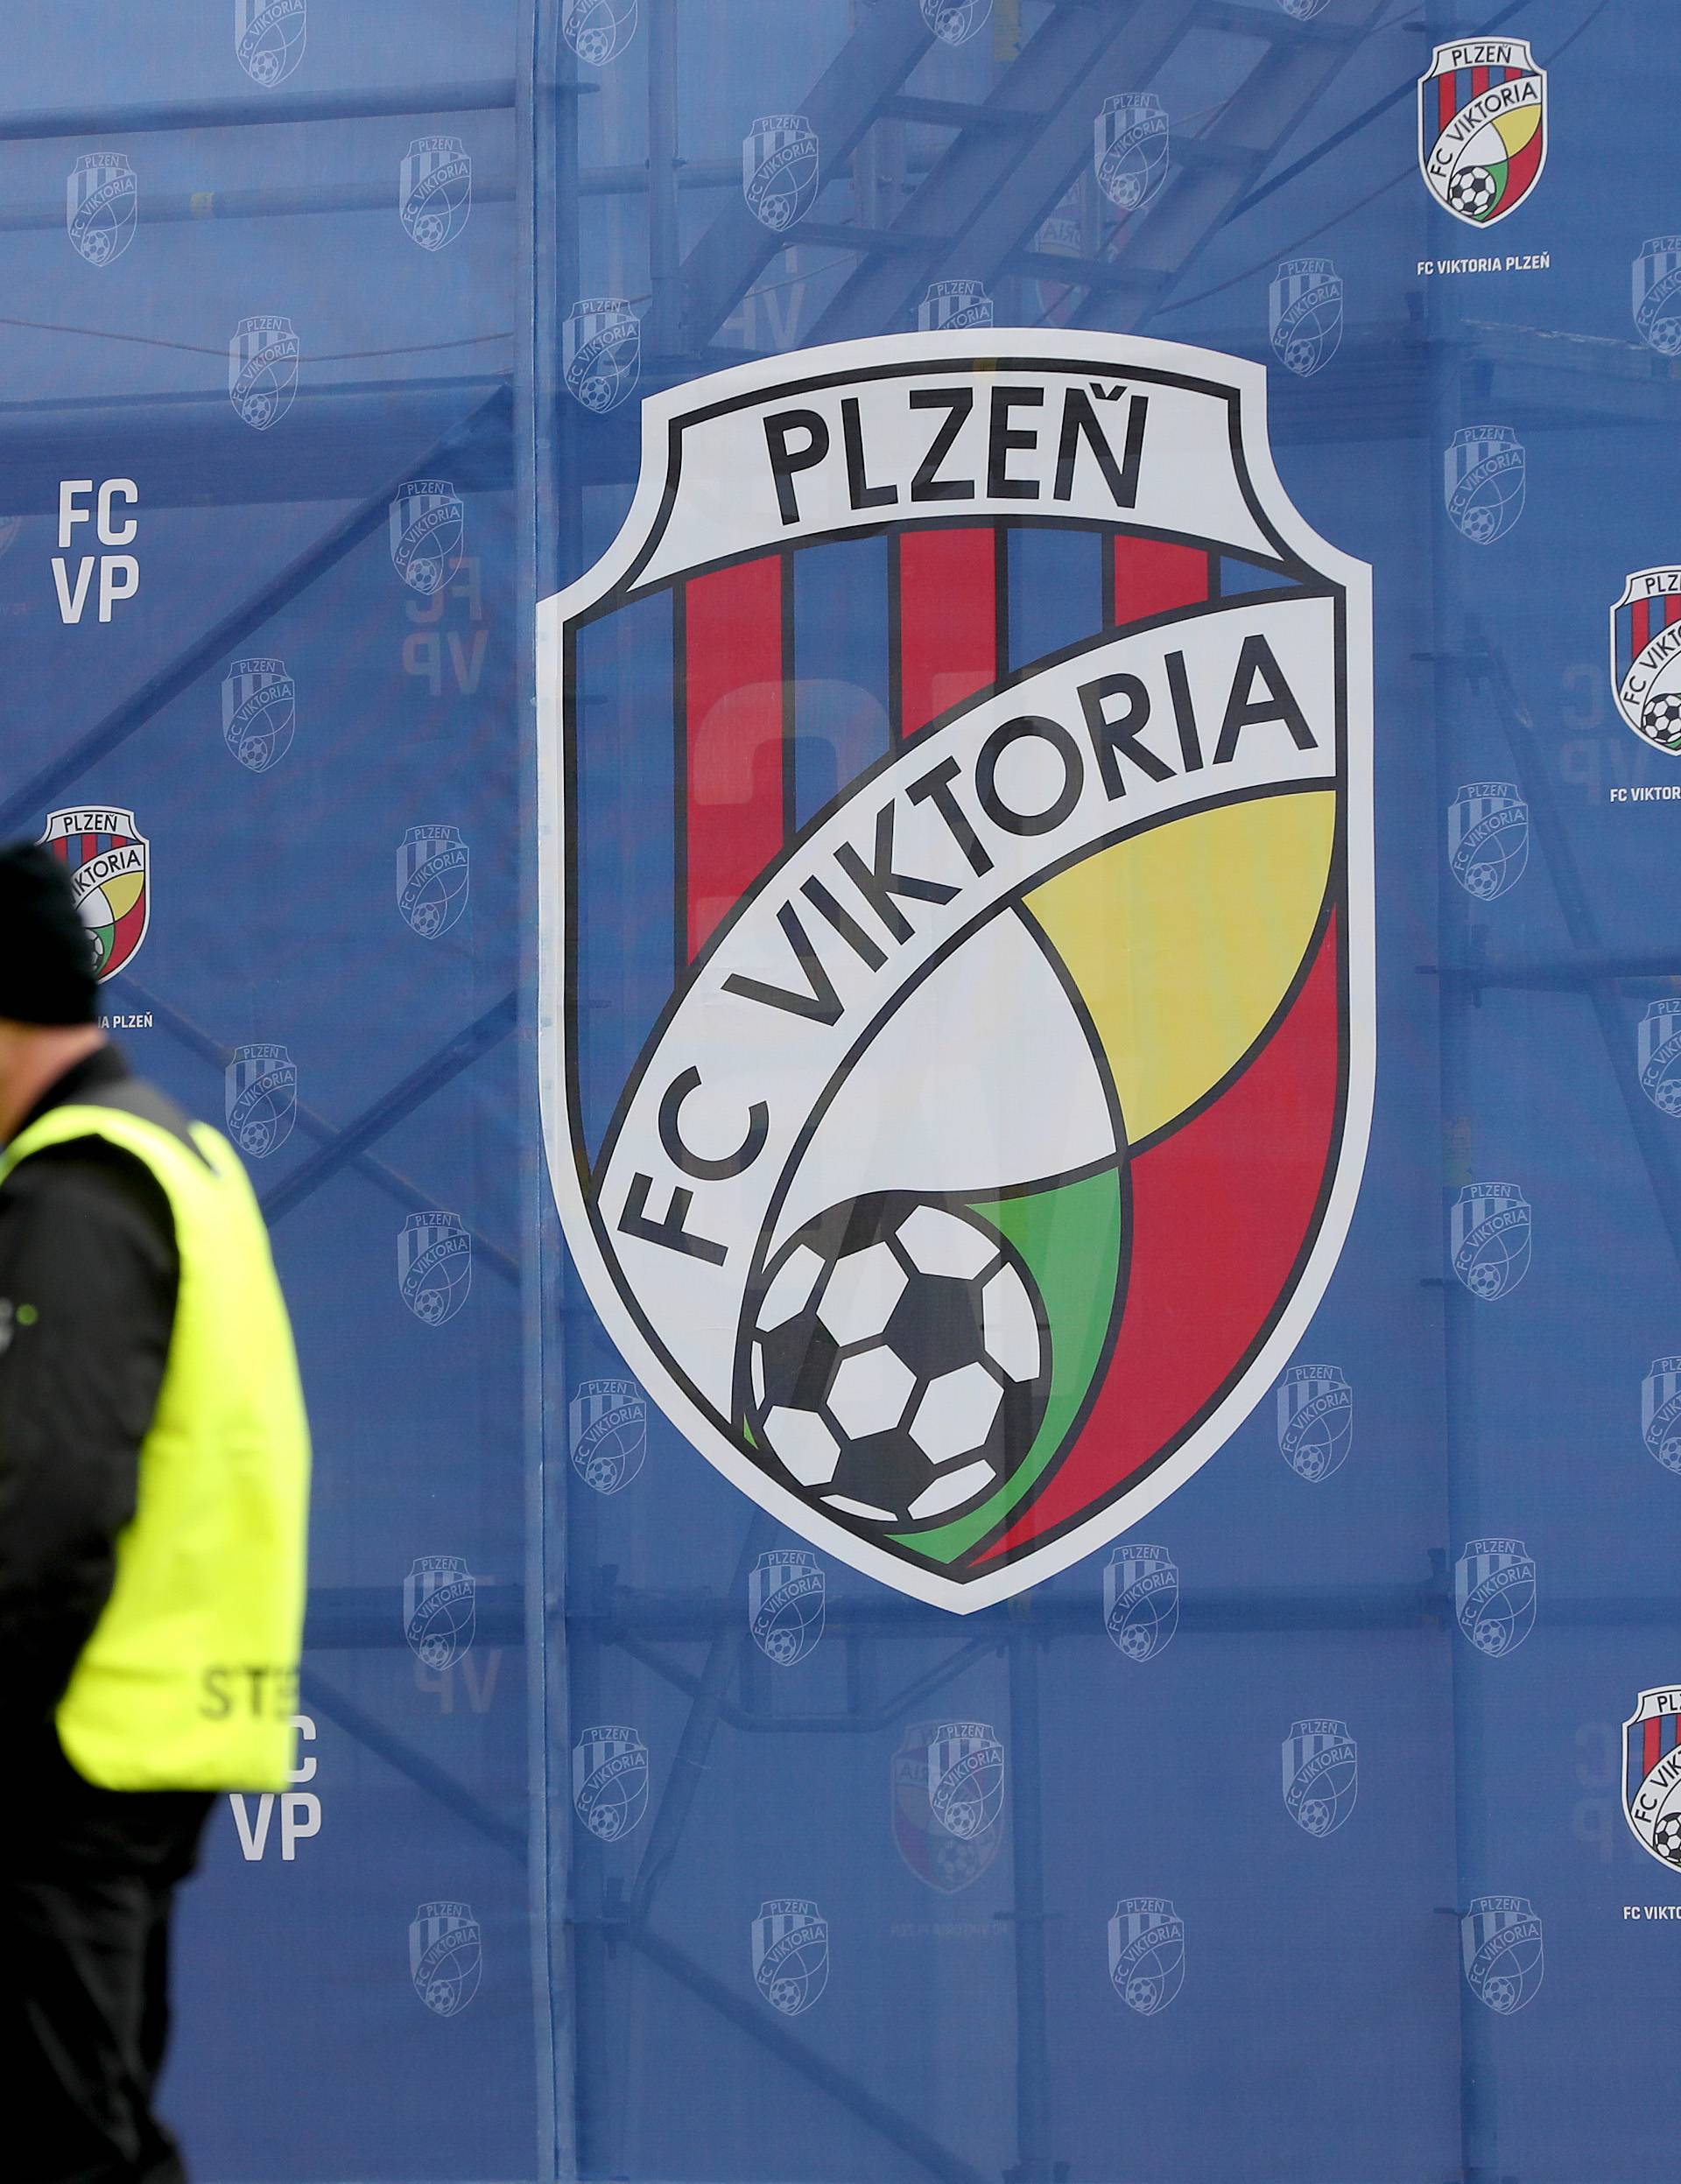 Plzen: Stadion FC Viktorie Plzen na kojem sutra igra utakmicu Europske lige protiv Dinama